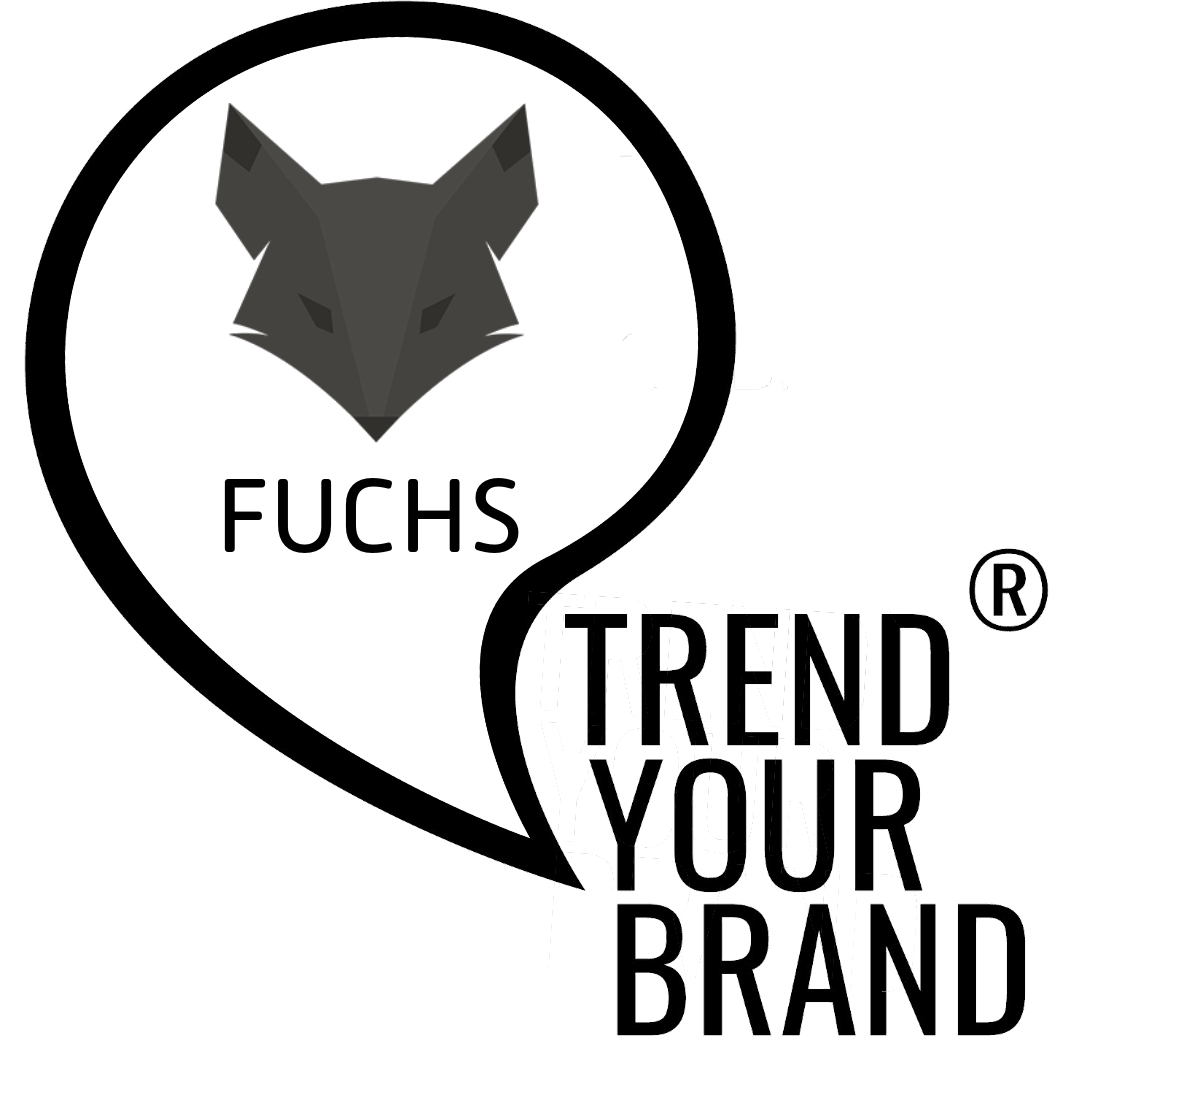 Fuchs Transferpressen